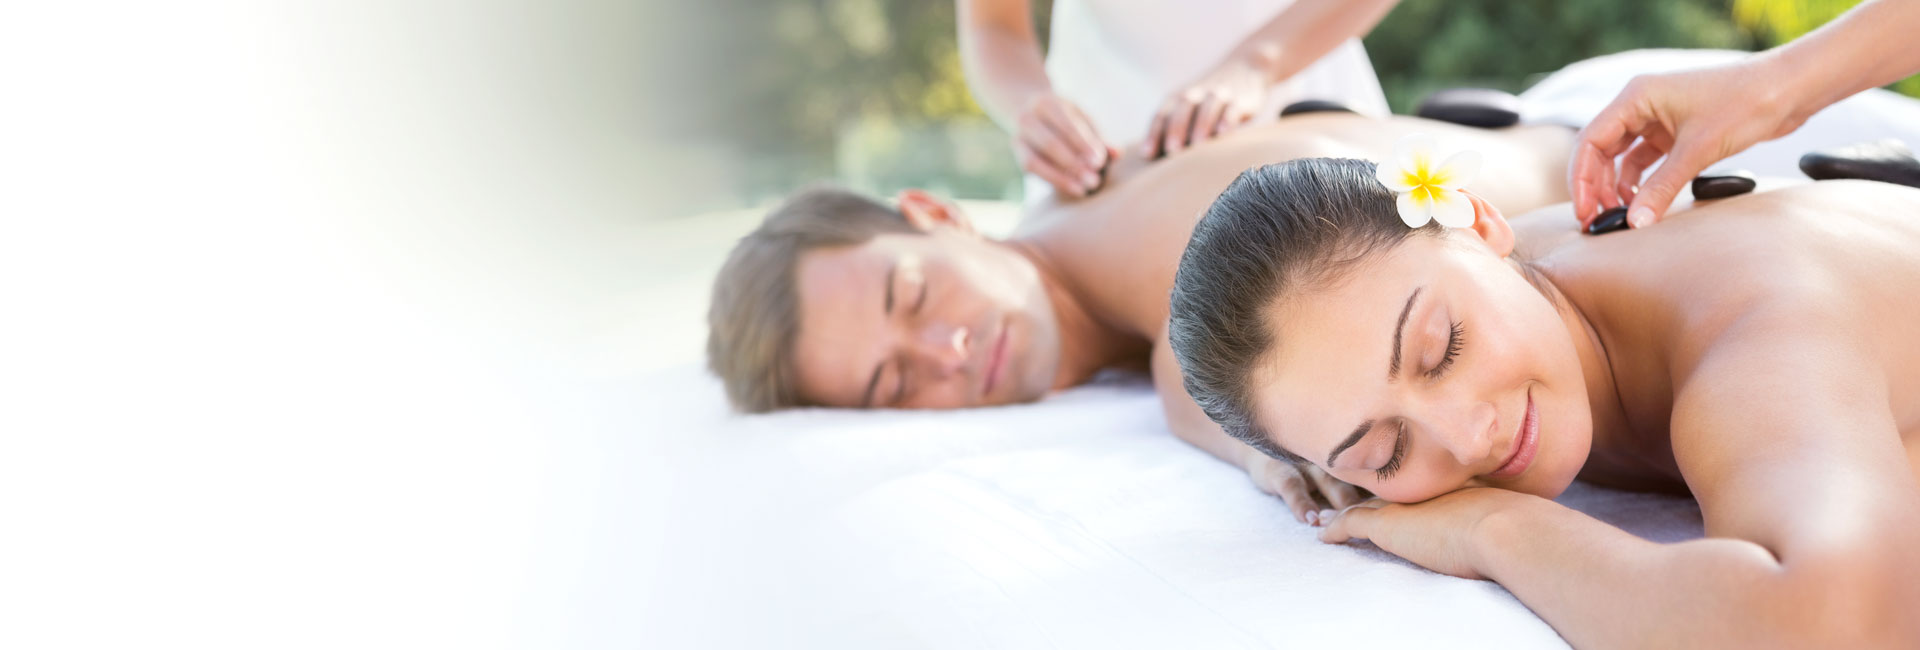 Spa Dew - Best Couple Massage & Facials, Korean Body Scrubs